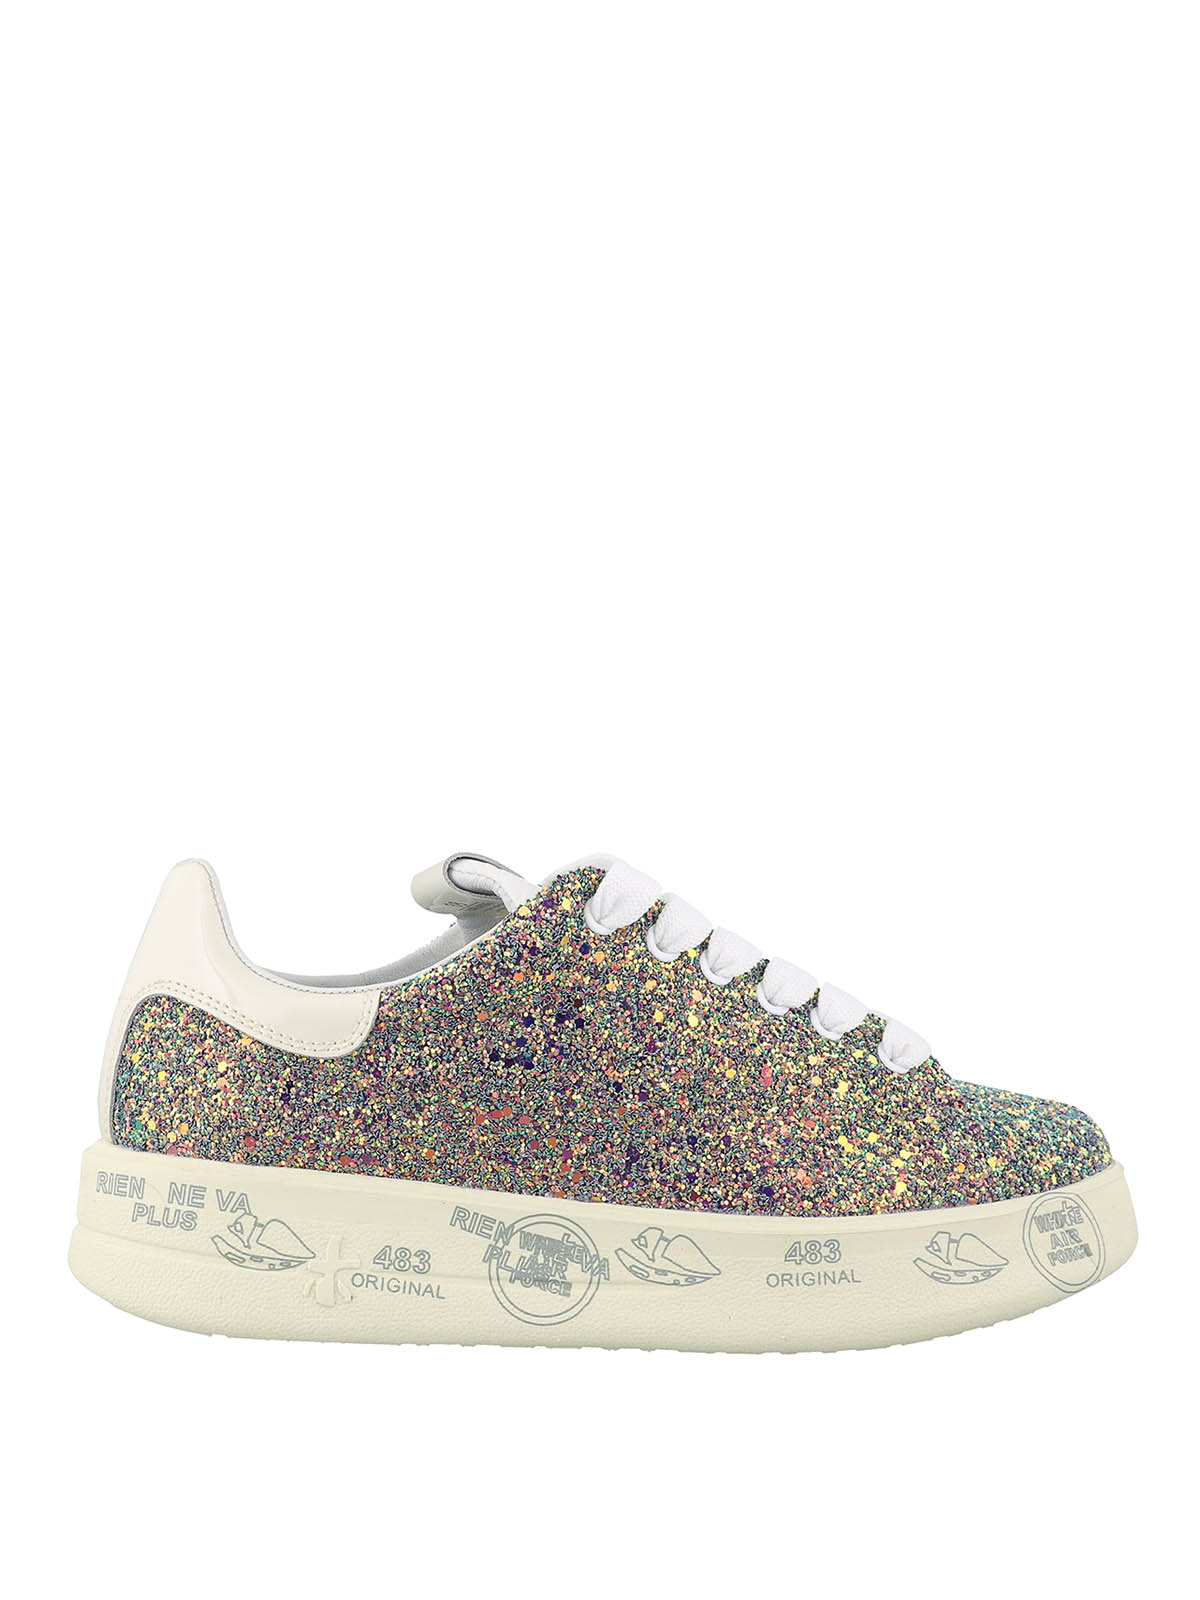 Belle 4539 glitter embellished sneakers 